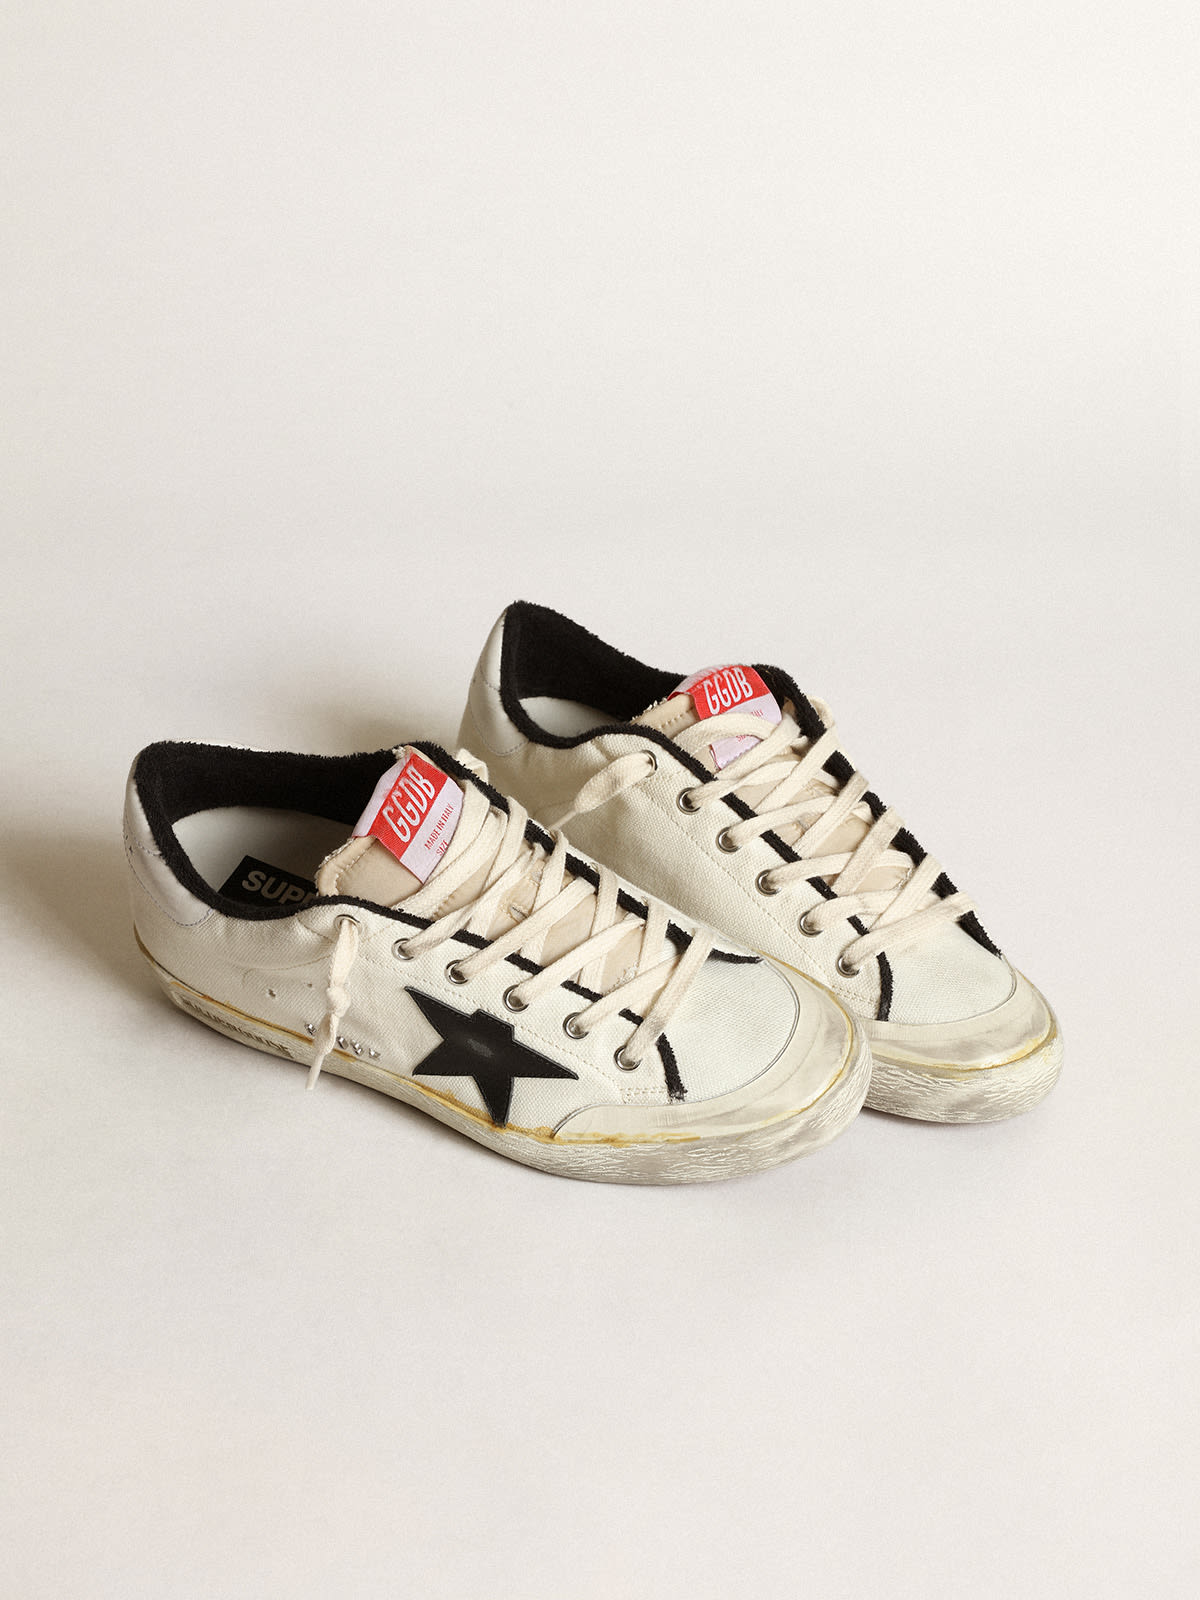 Golden Goose - Sneaker Super-Star donna LTD in canvas beige con stella in pelle nera e talloncino in pelle bianca in 